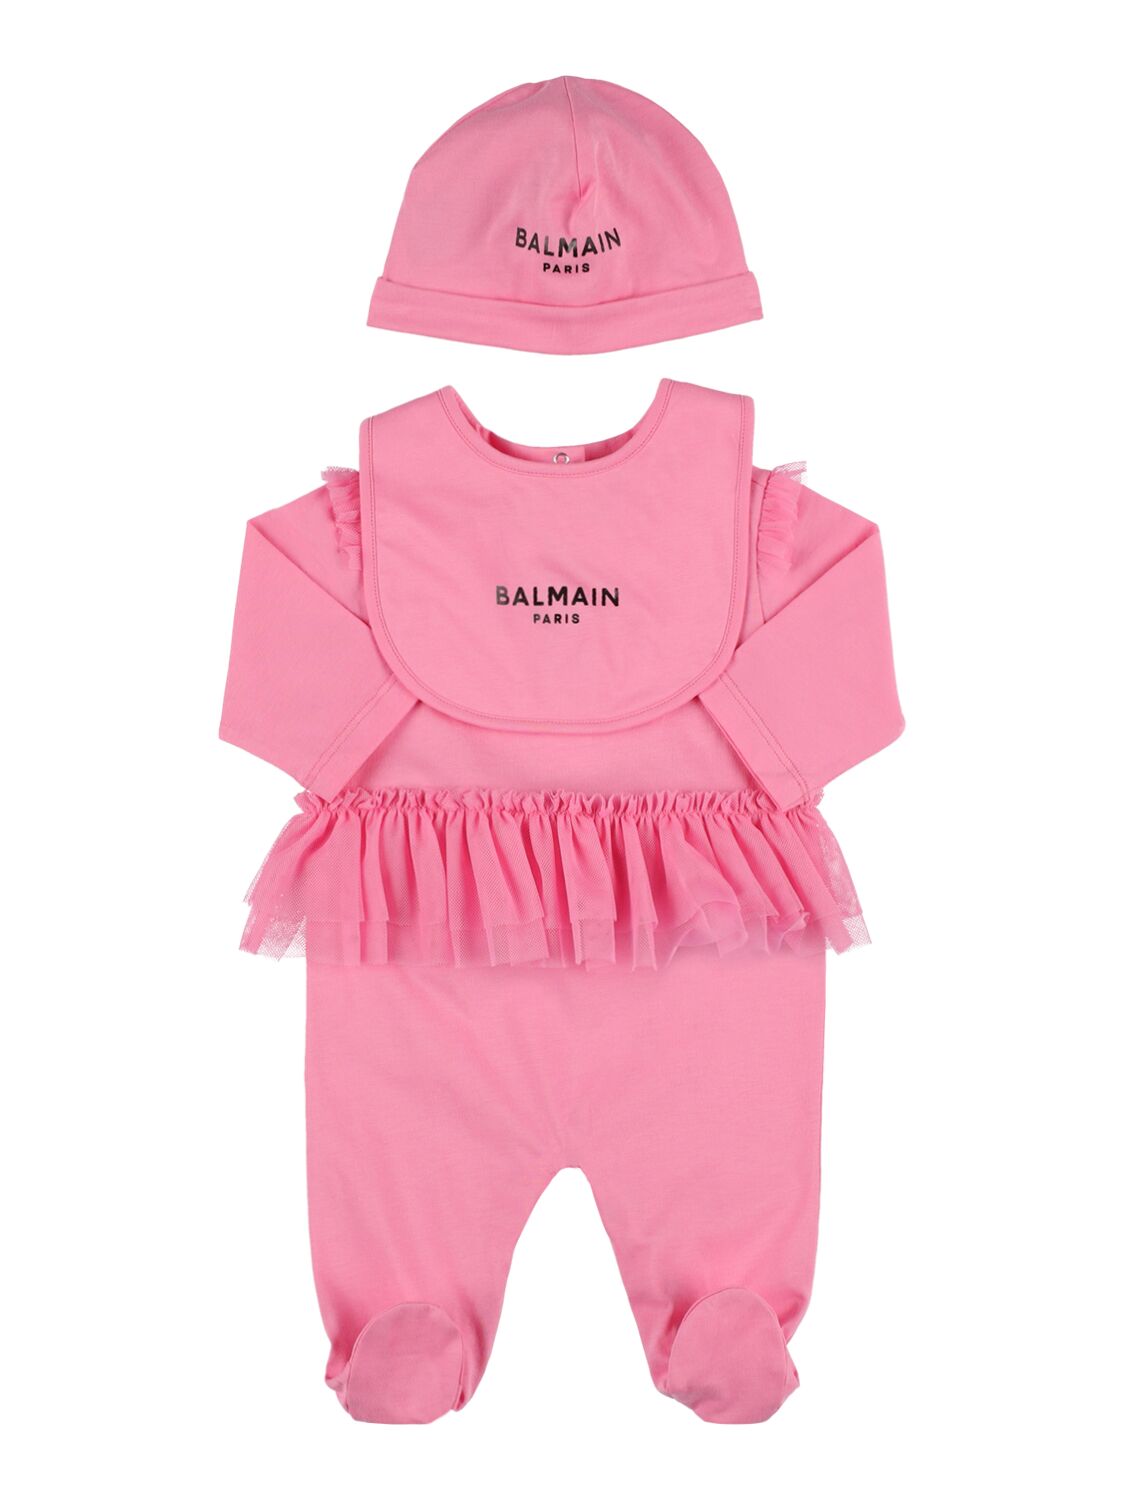 Balmain Babies' Cotton Jersey Romper, Bib & Hat In Pink